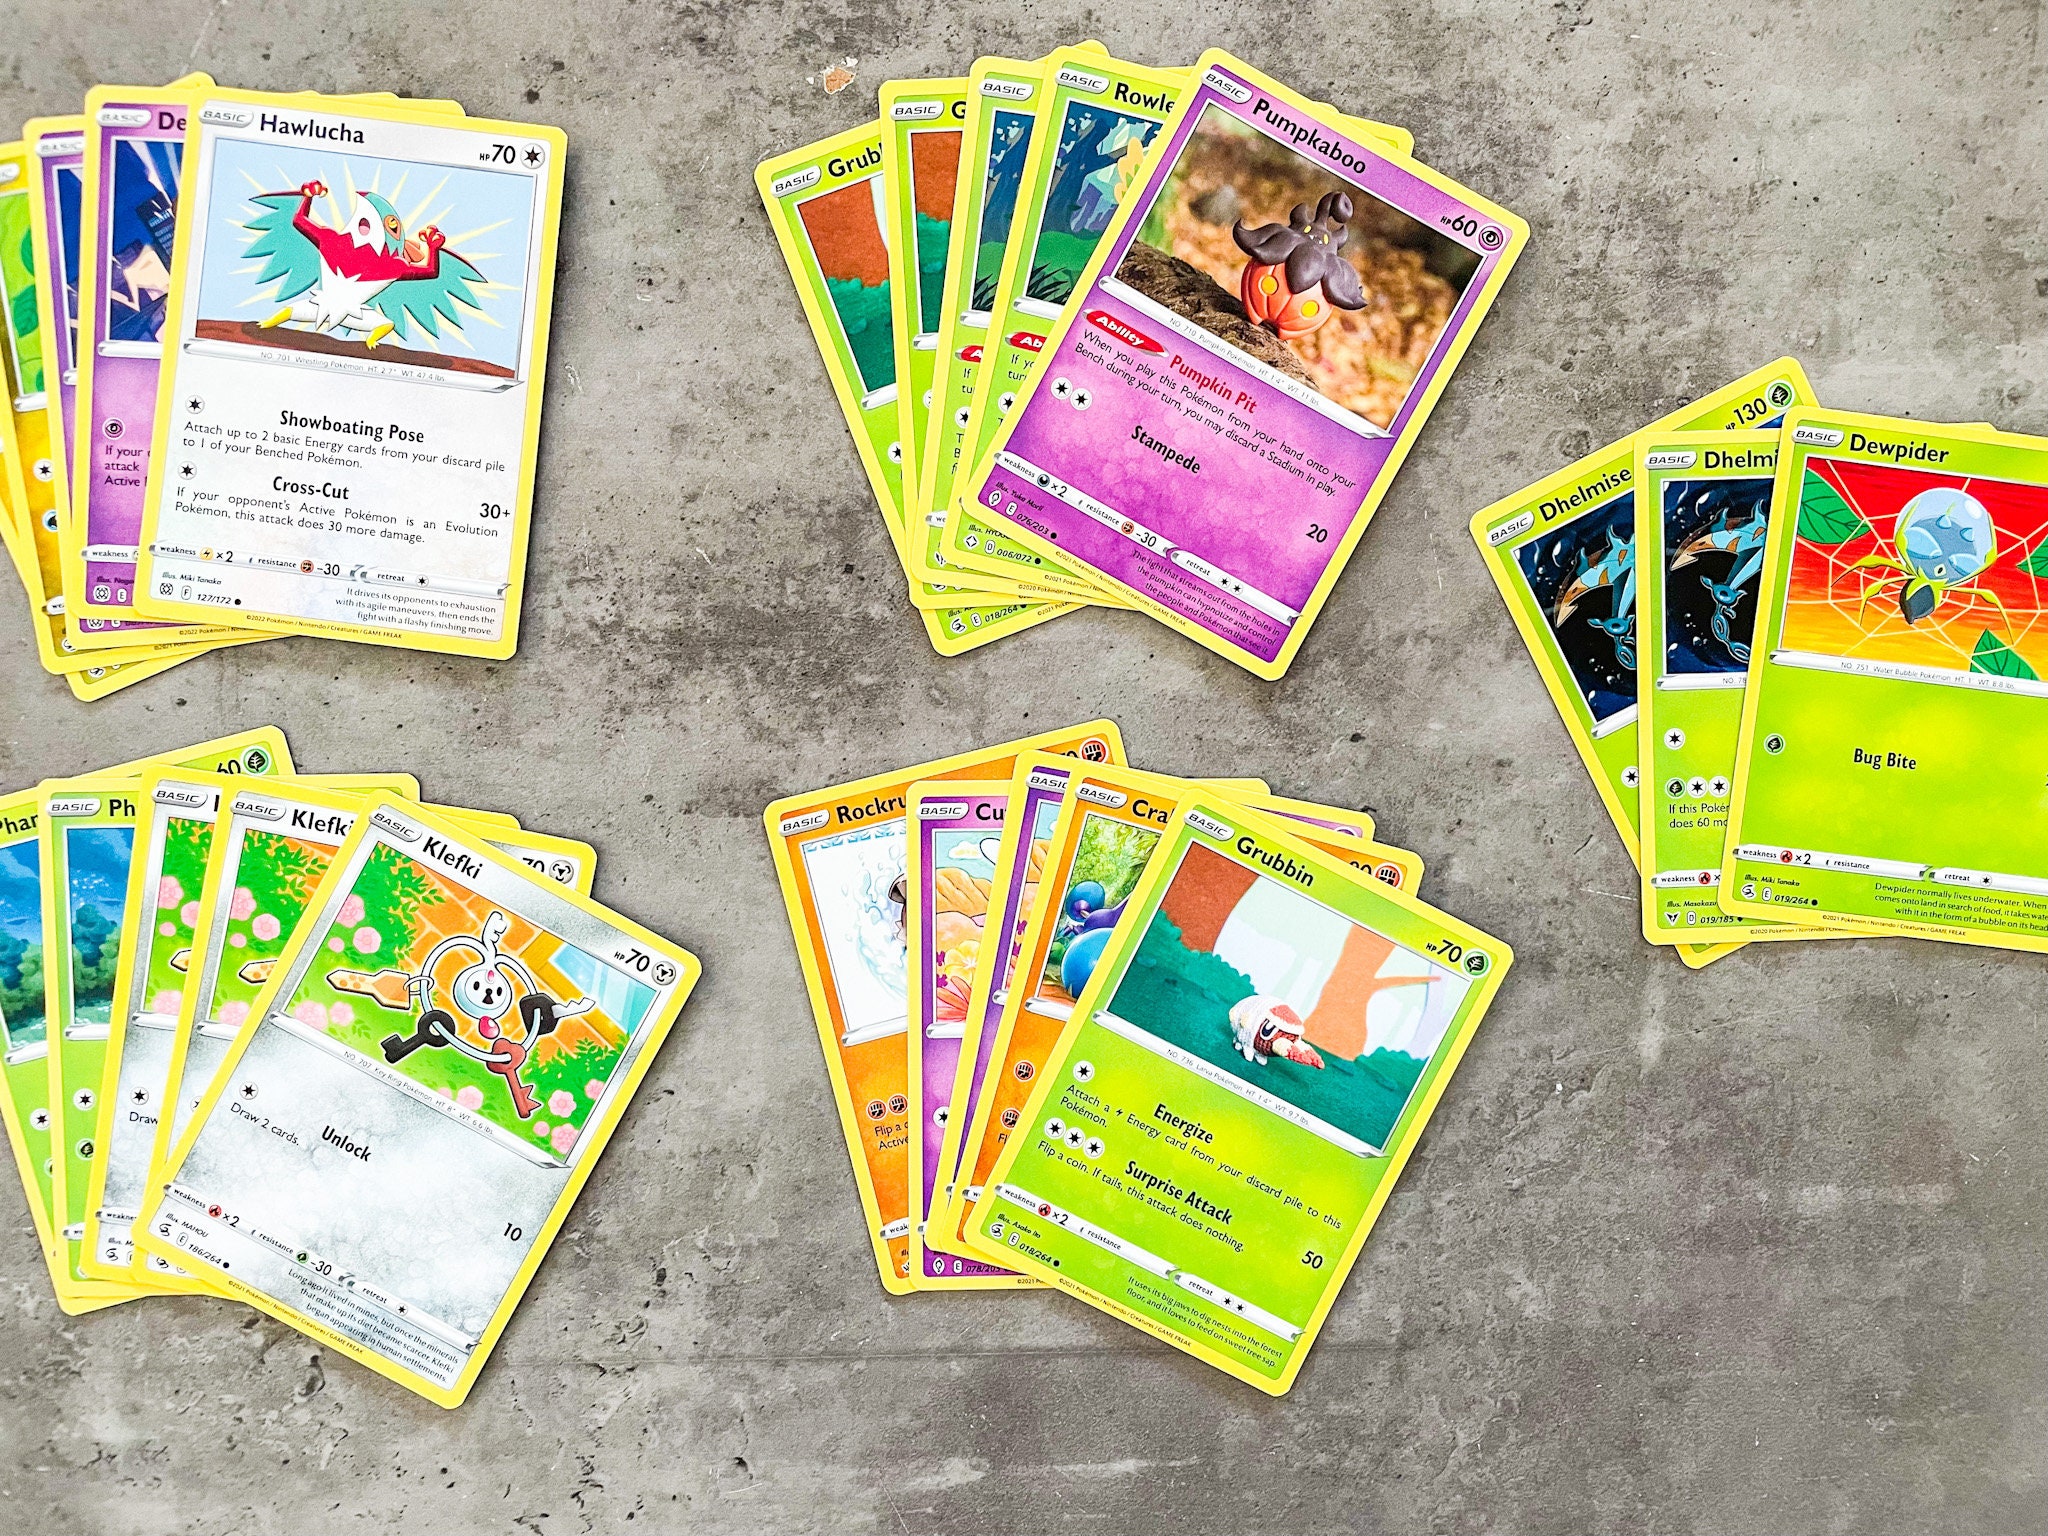 Carta Pokemon Card Game - McDonald's 2022